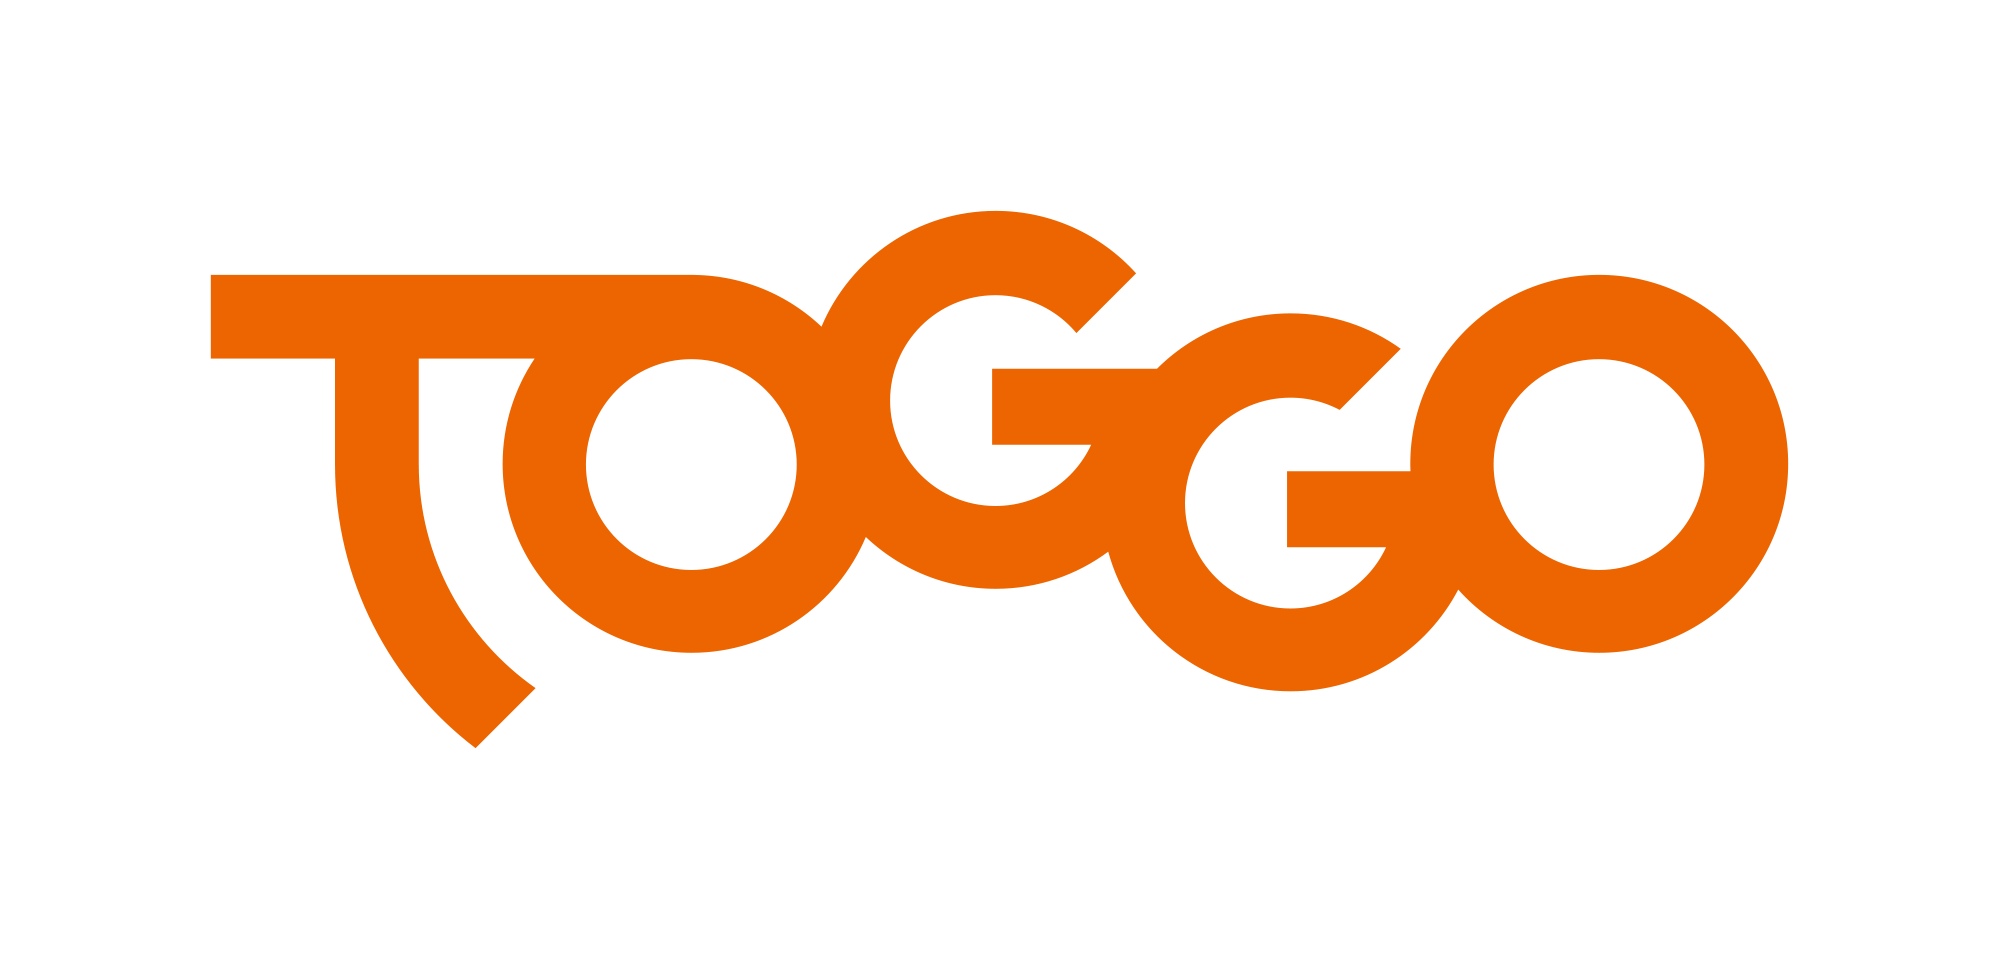 Toggo logo rgb